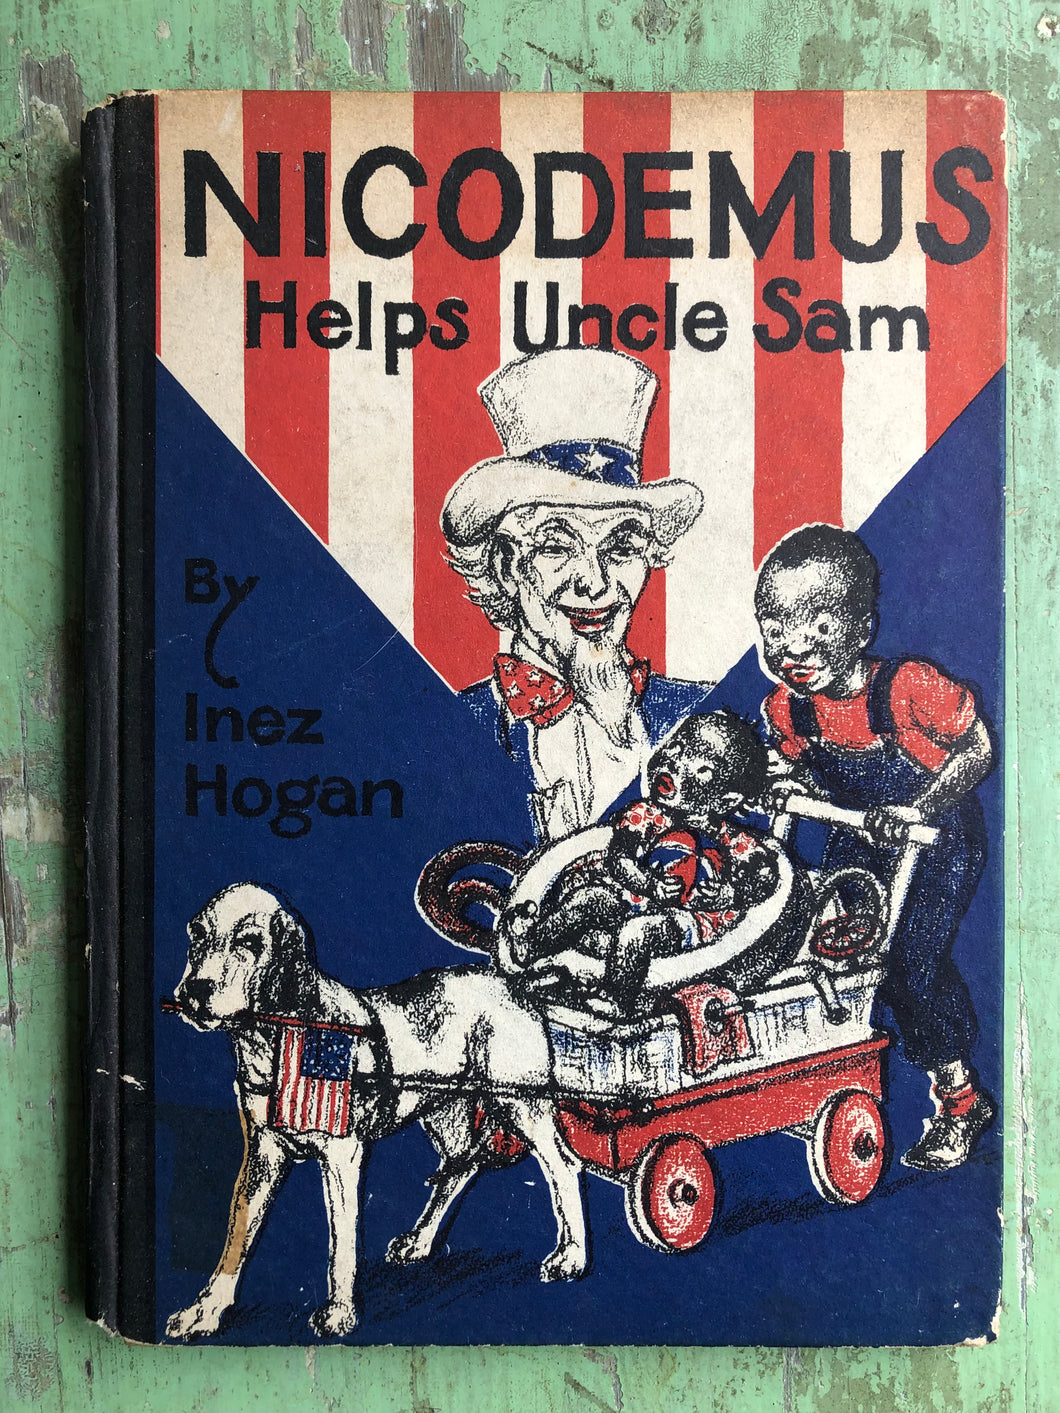 Nicodemus Helps Uncle Sam by Inez Hogan. SIGNED